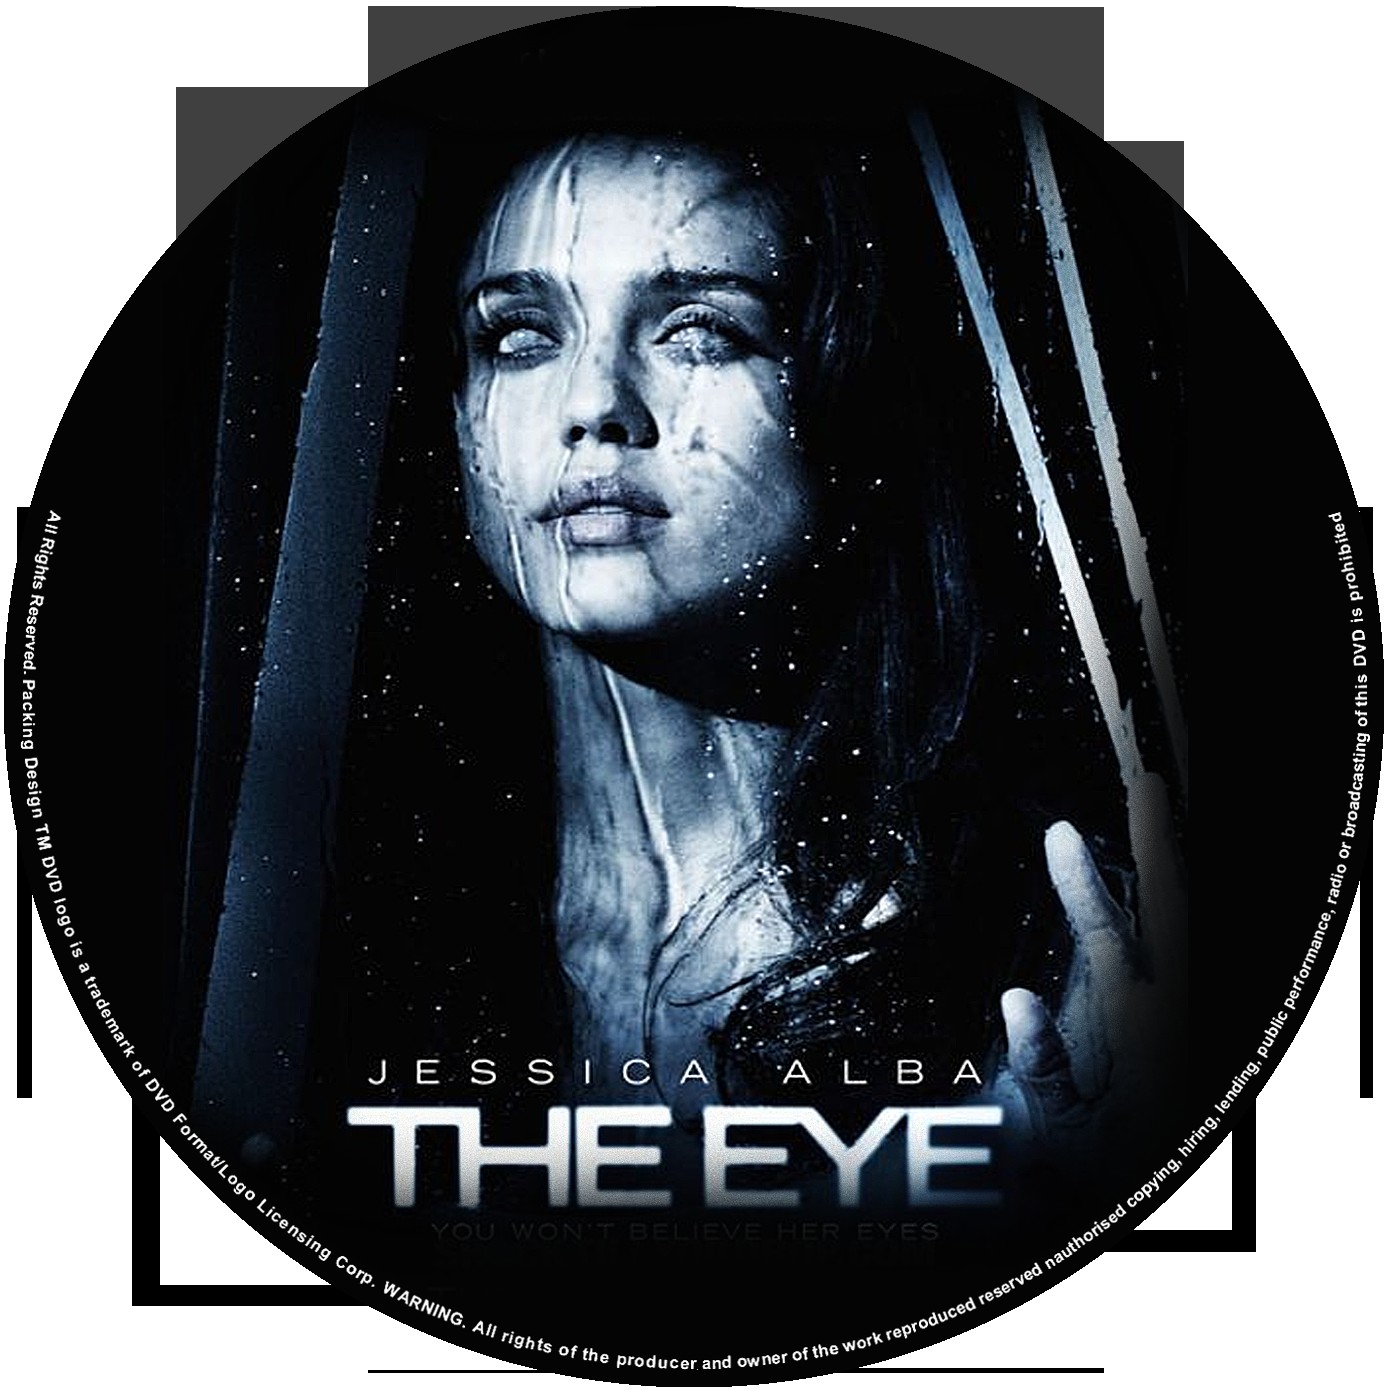 The Eye (2008) Label